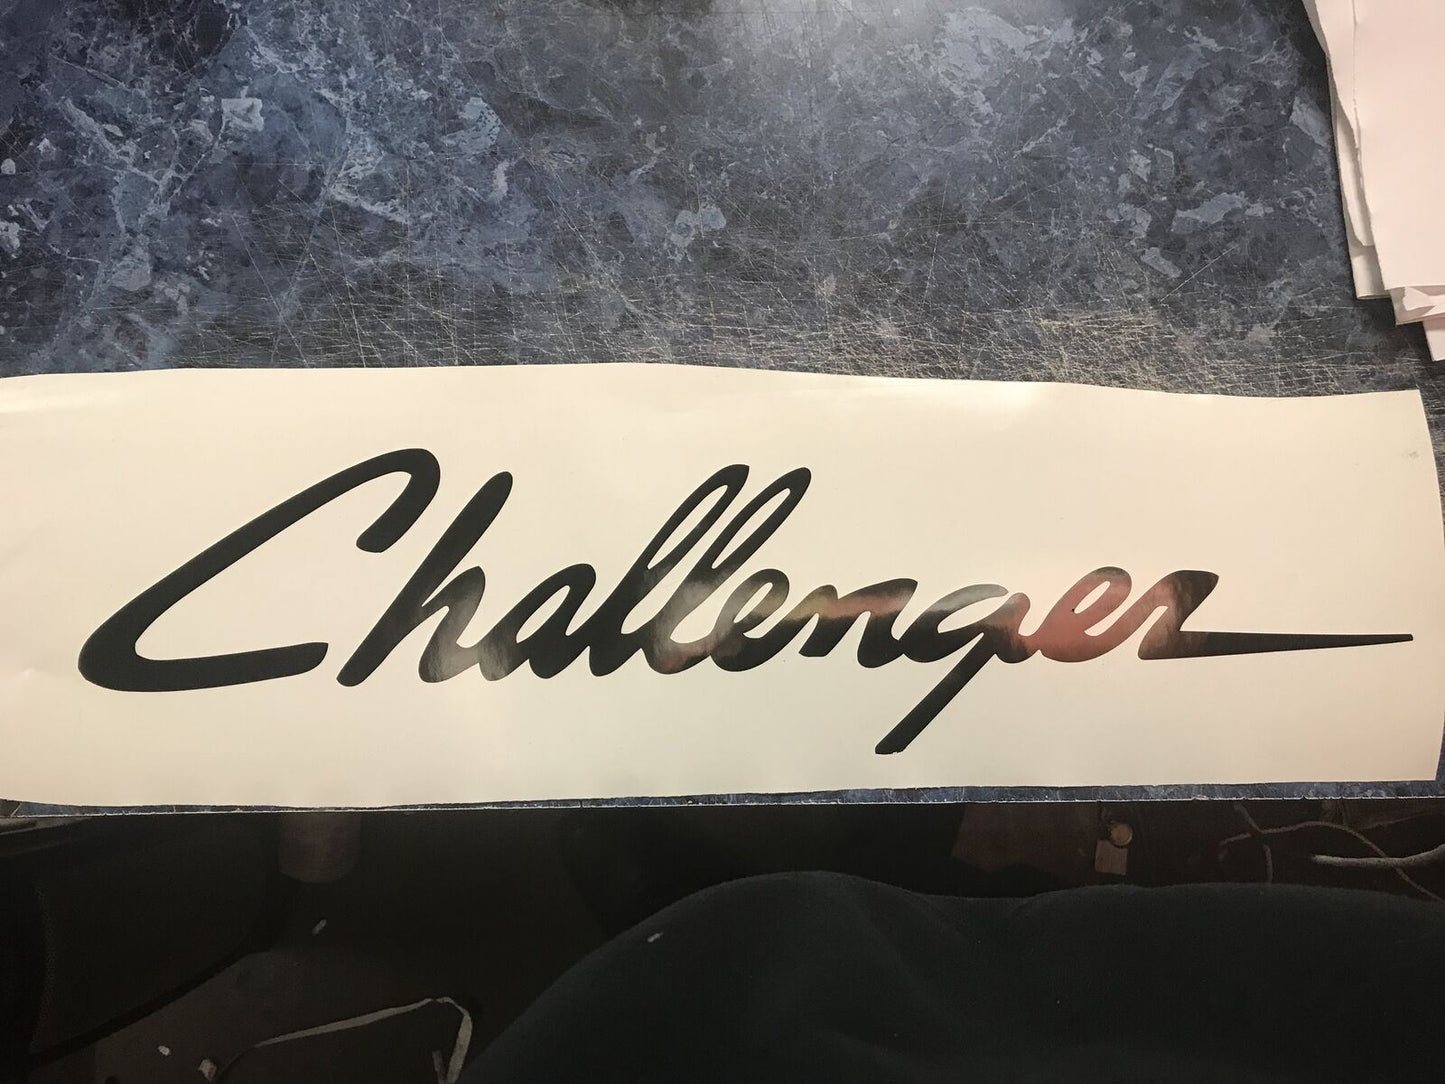 Dodge  Challenger Decal